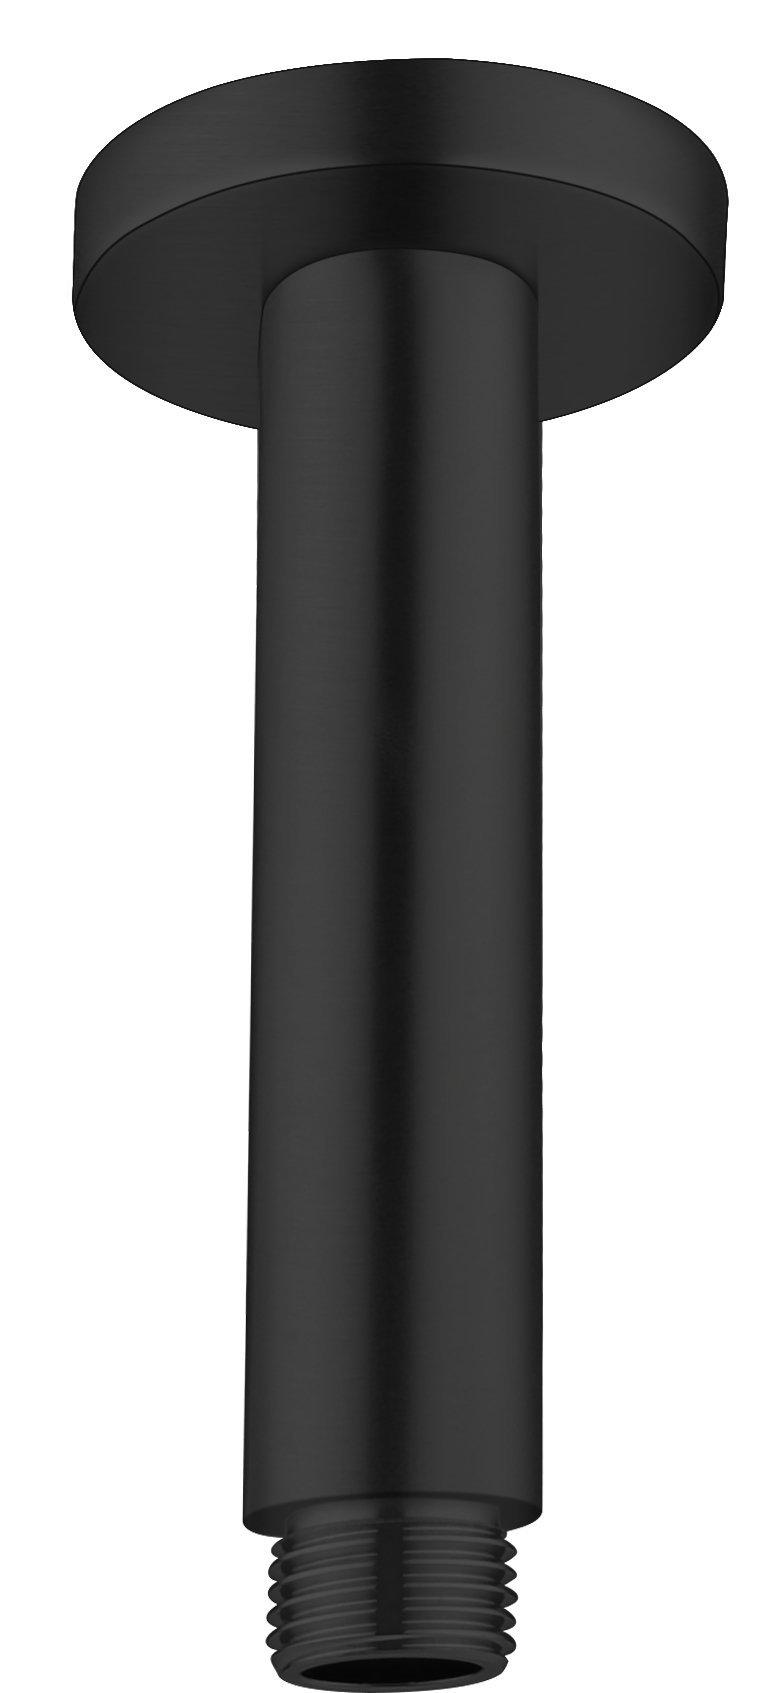 NERO VITRA ROUND CEILING ARM MATTE BLACK Product Image 1